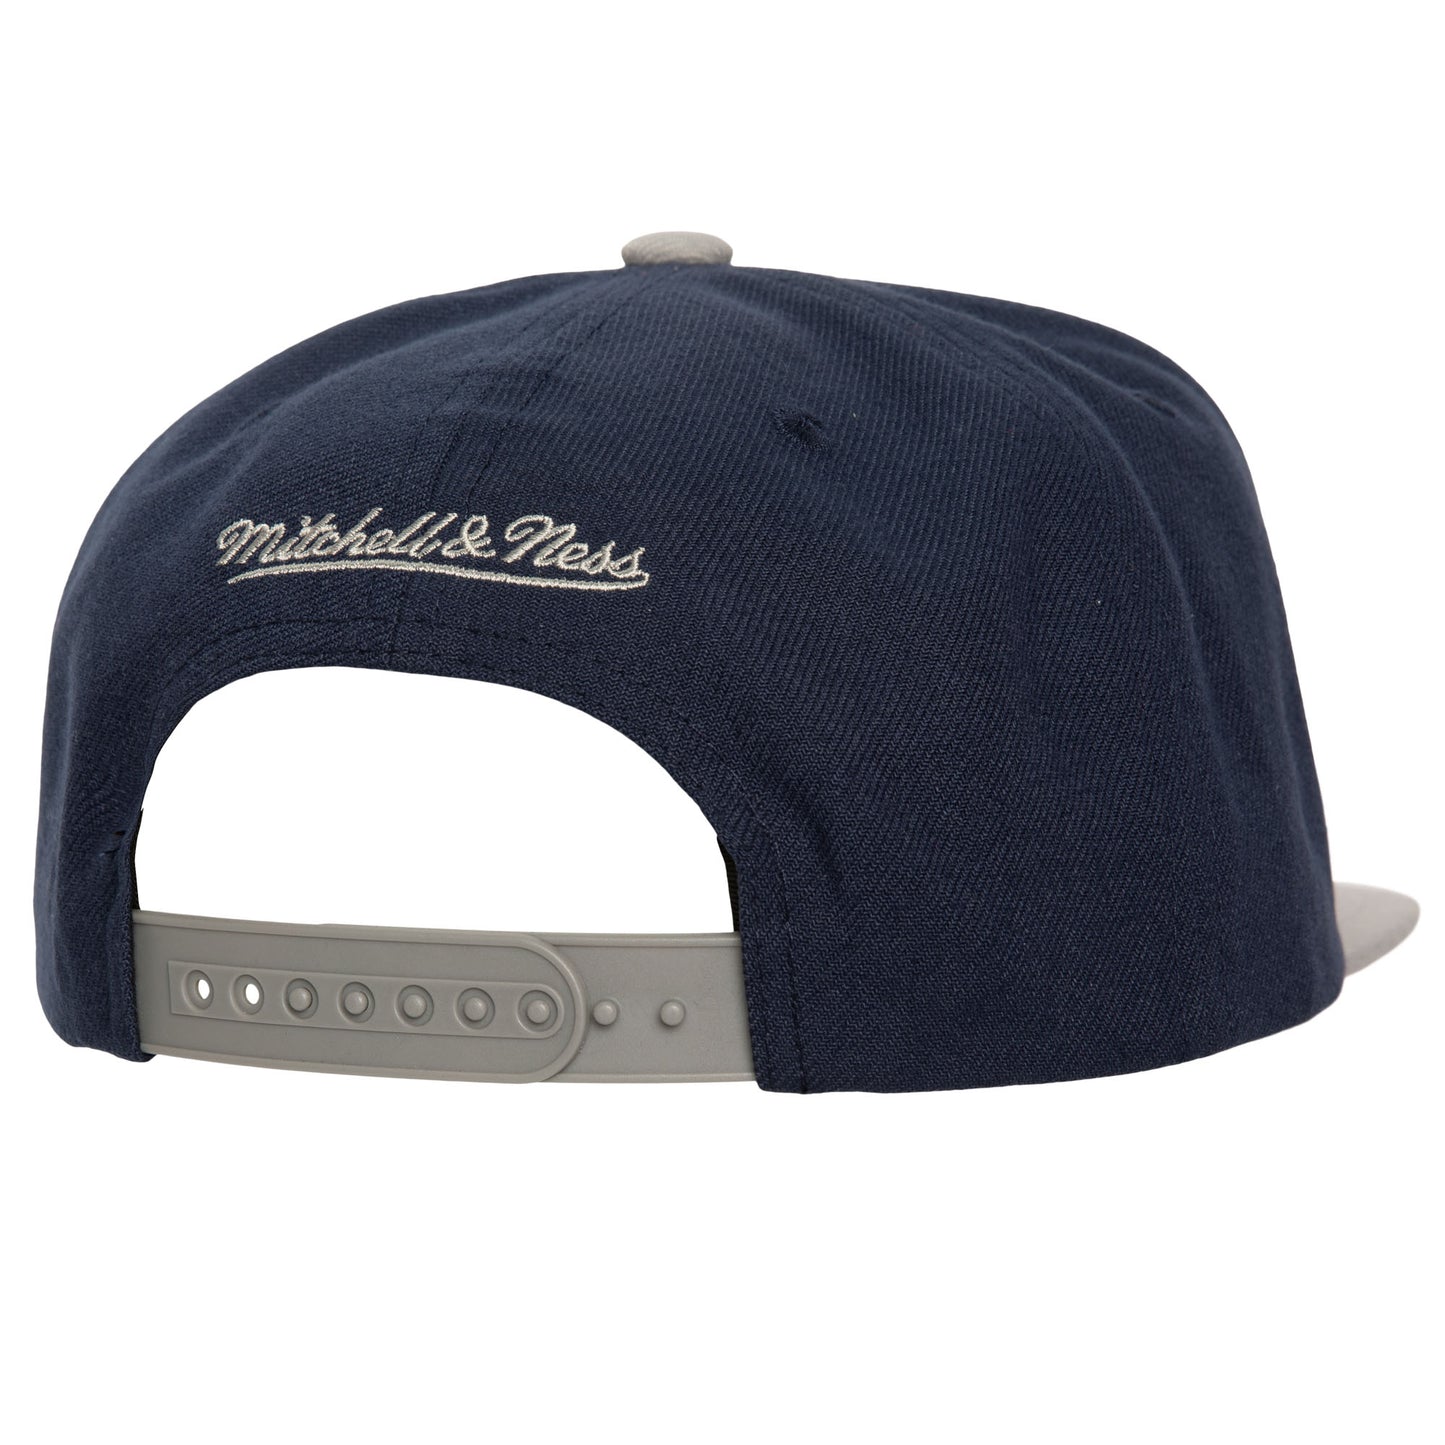 New York Yankees Mitchell & Ness Banner Snapback Hat-Blue